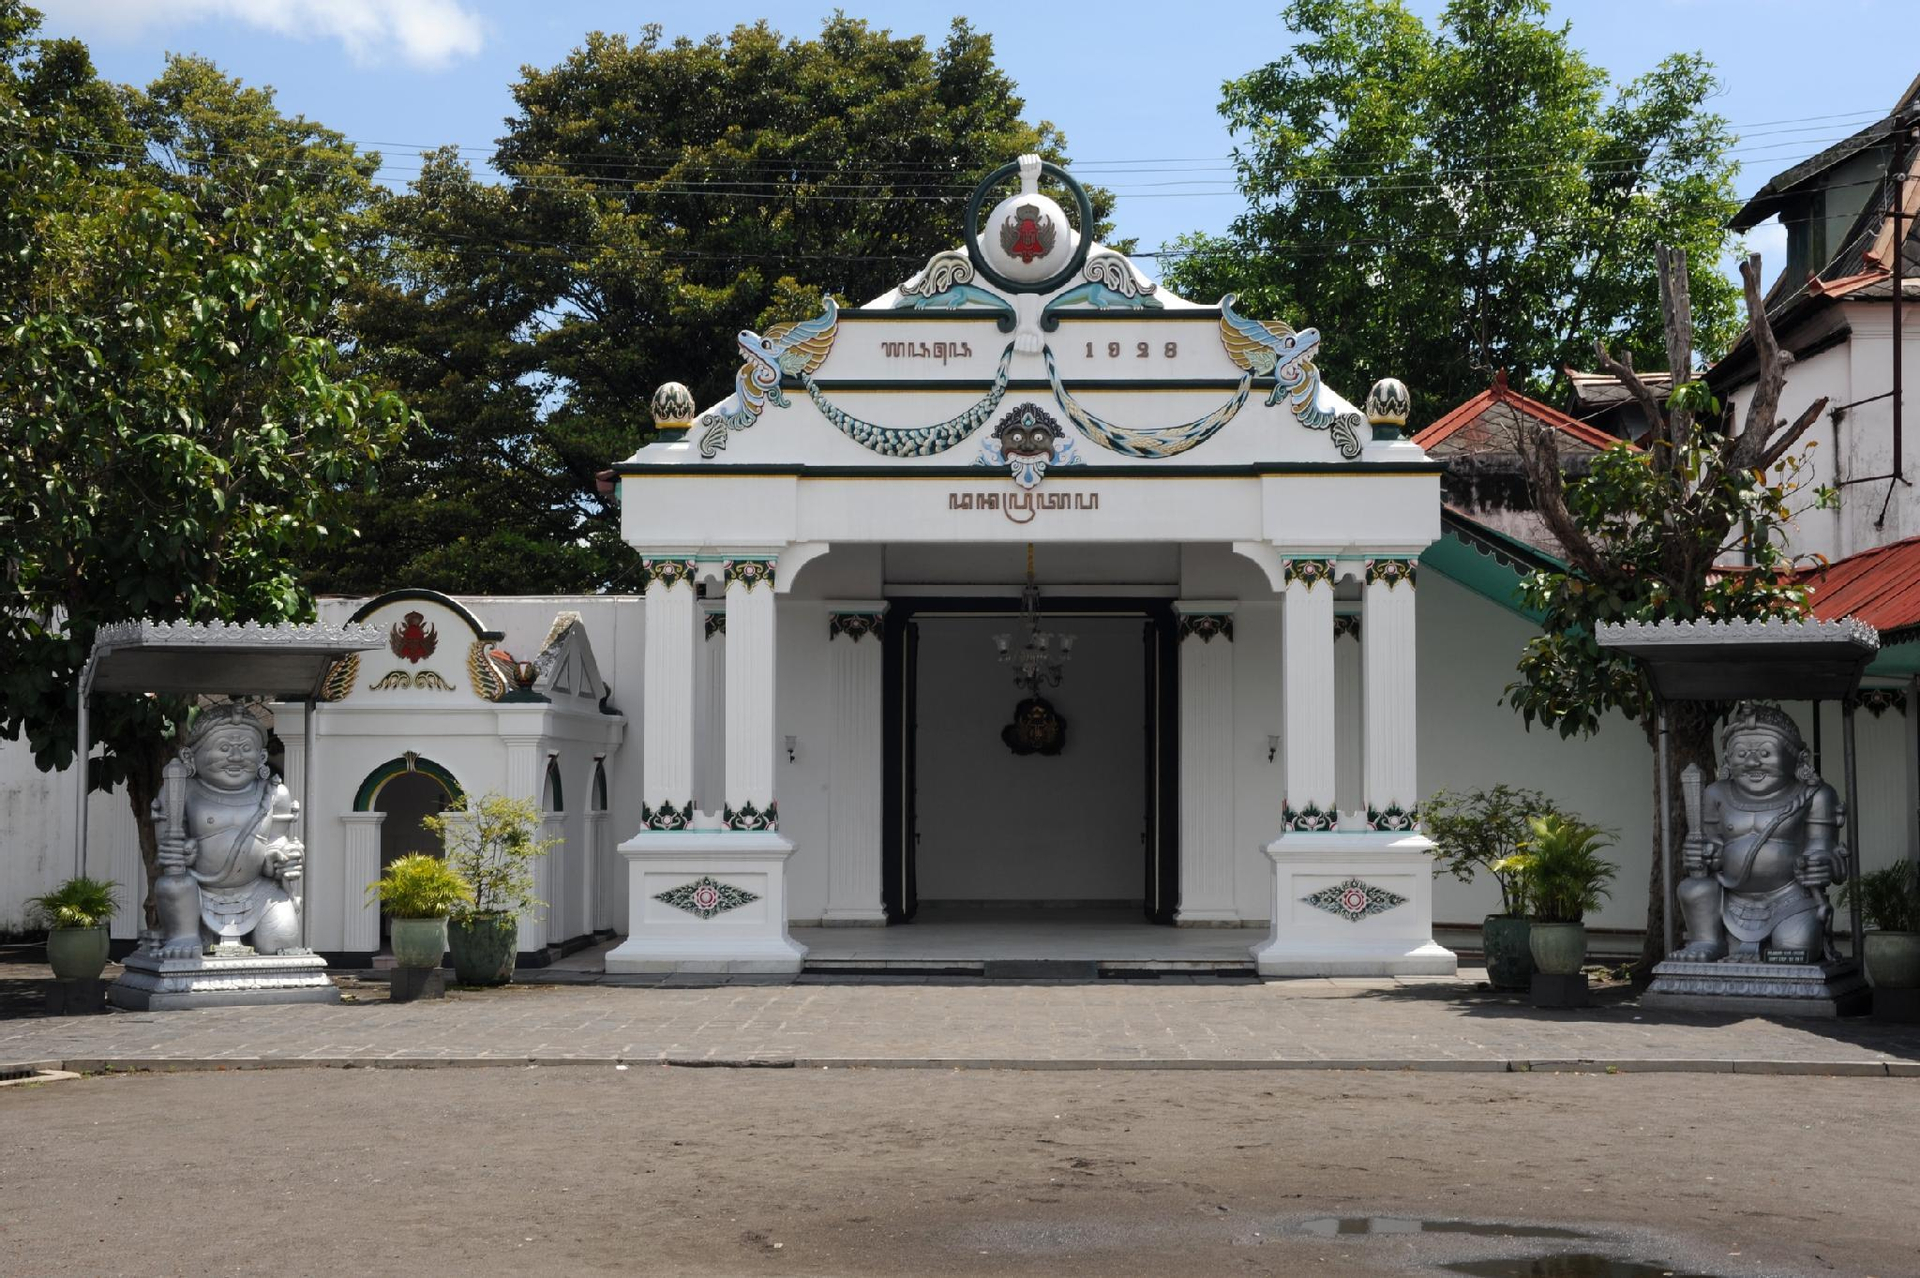 Exterior & Views 1, Simply Homy Guest House Jogokaryan, Yogyakarta